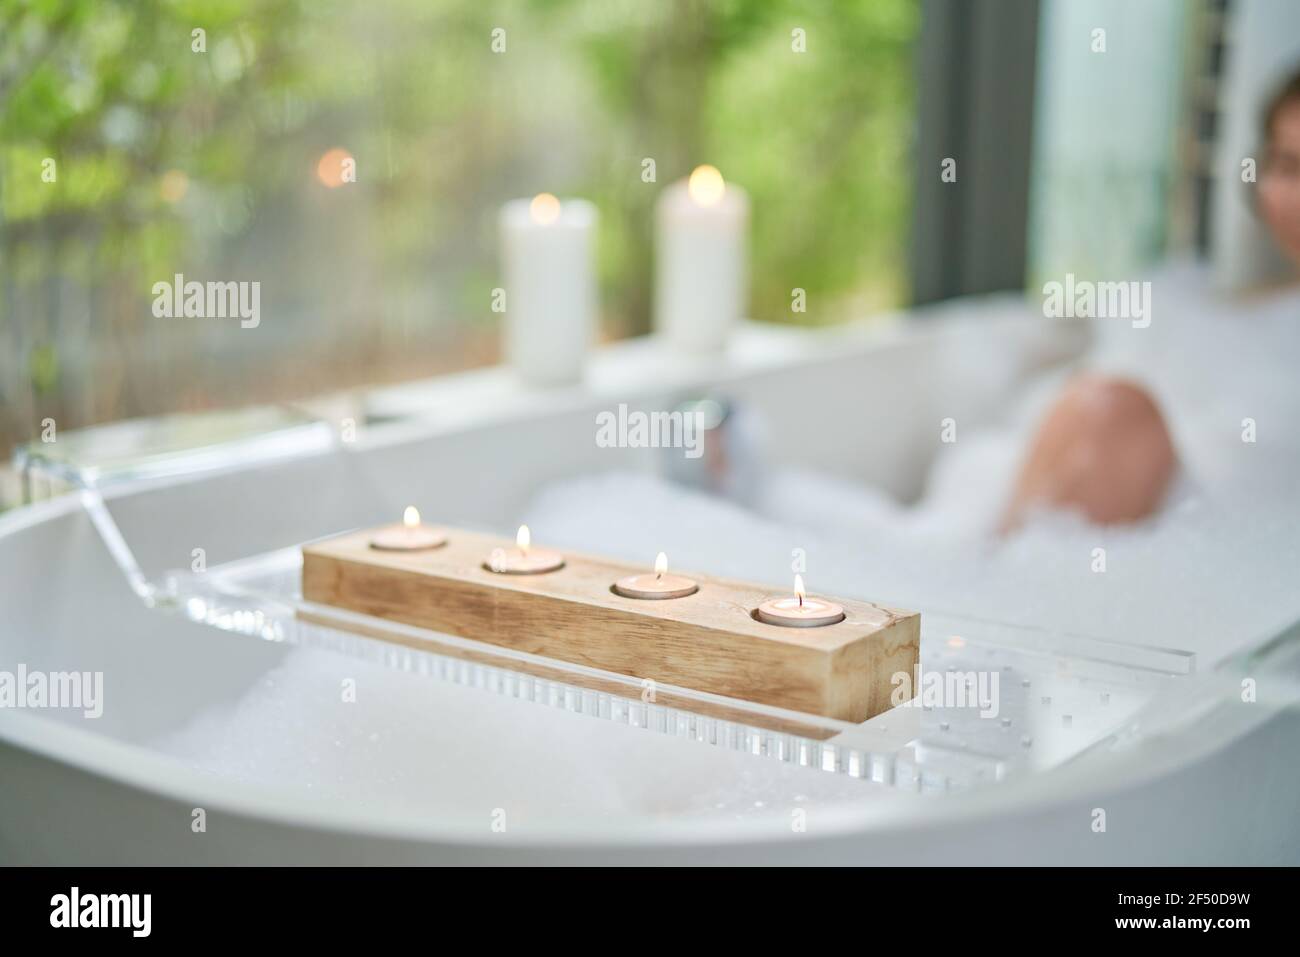 Tea light candles on tray over bubble bath Stock Photo